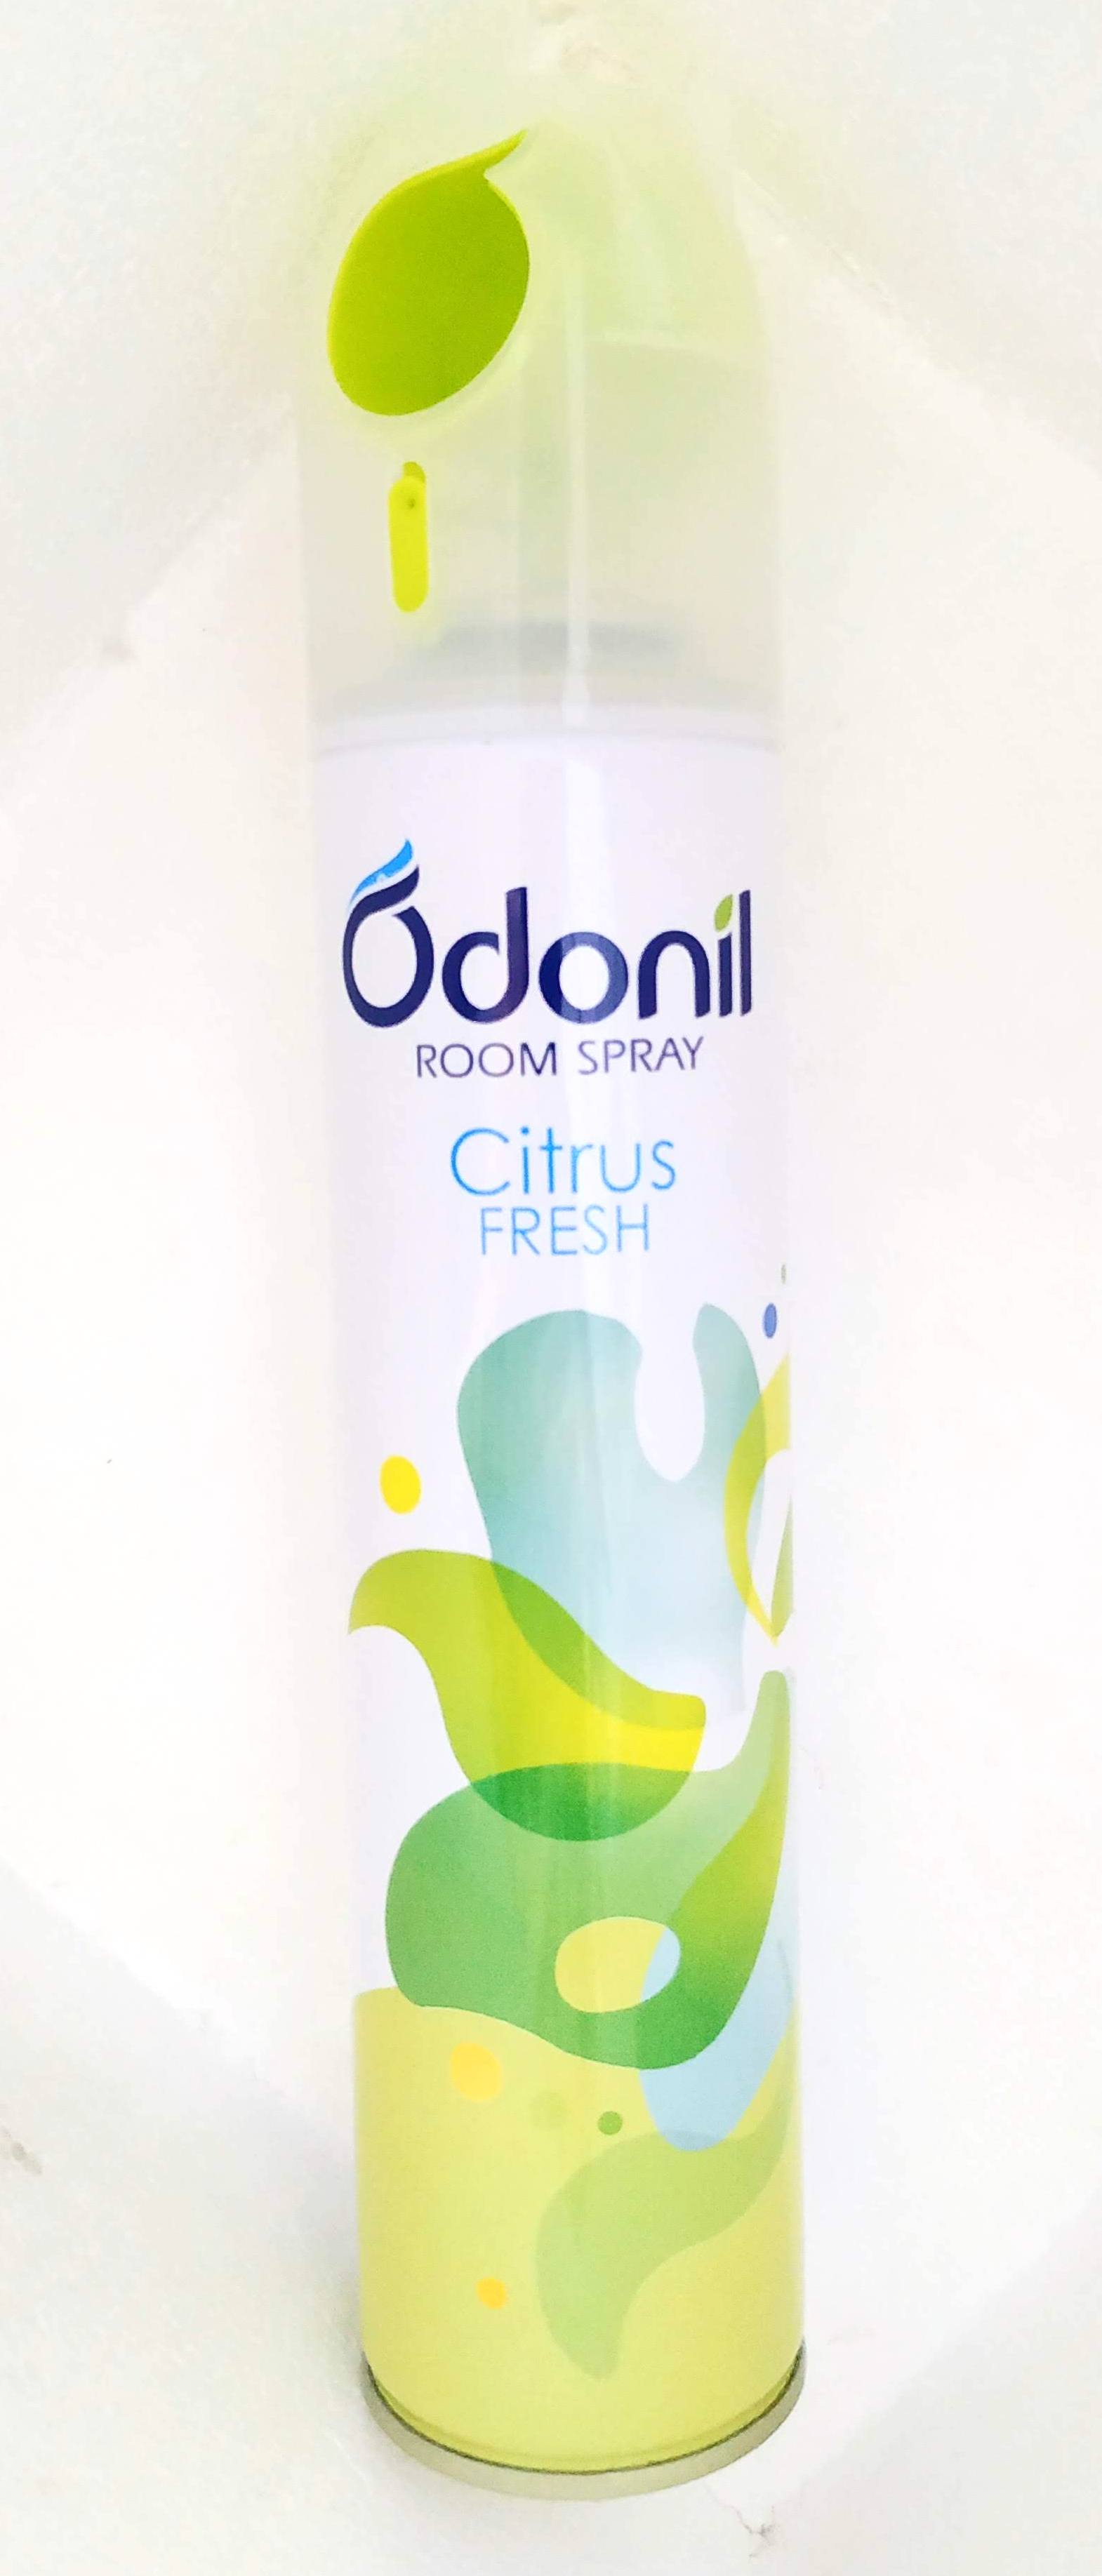 Odonil Room Spray - Citrus Fresh 240ml -  Dabur - Medizzo.com